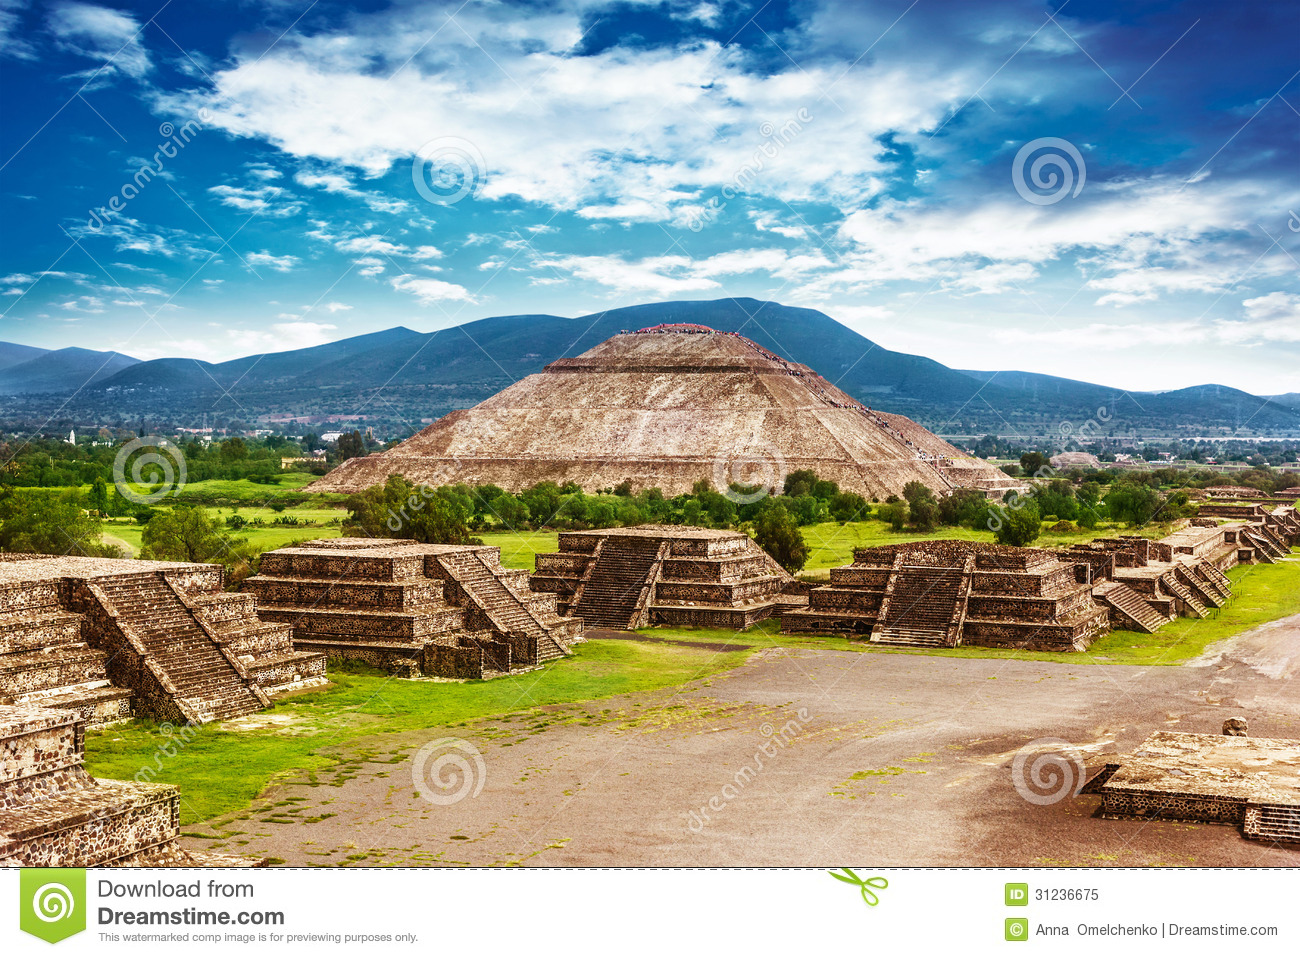     City Old Ruins Of Aztec Civilization Mexico North America World